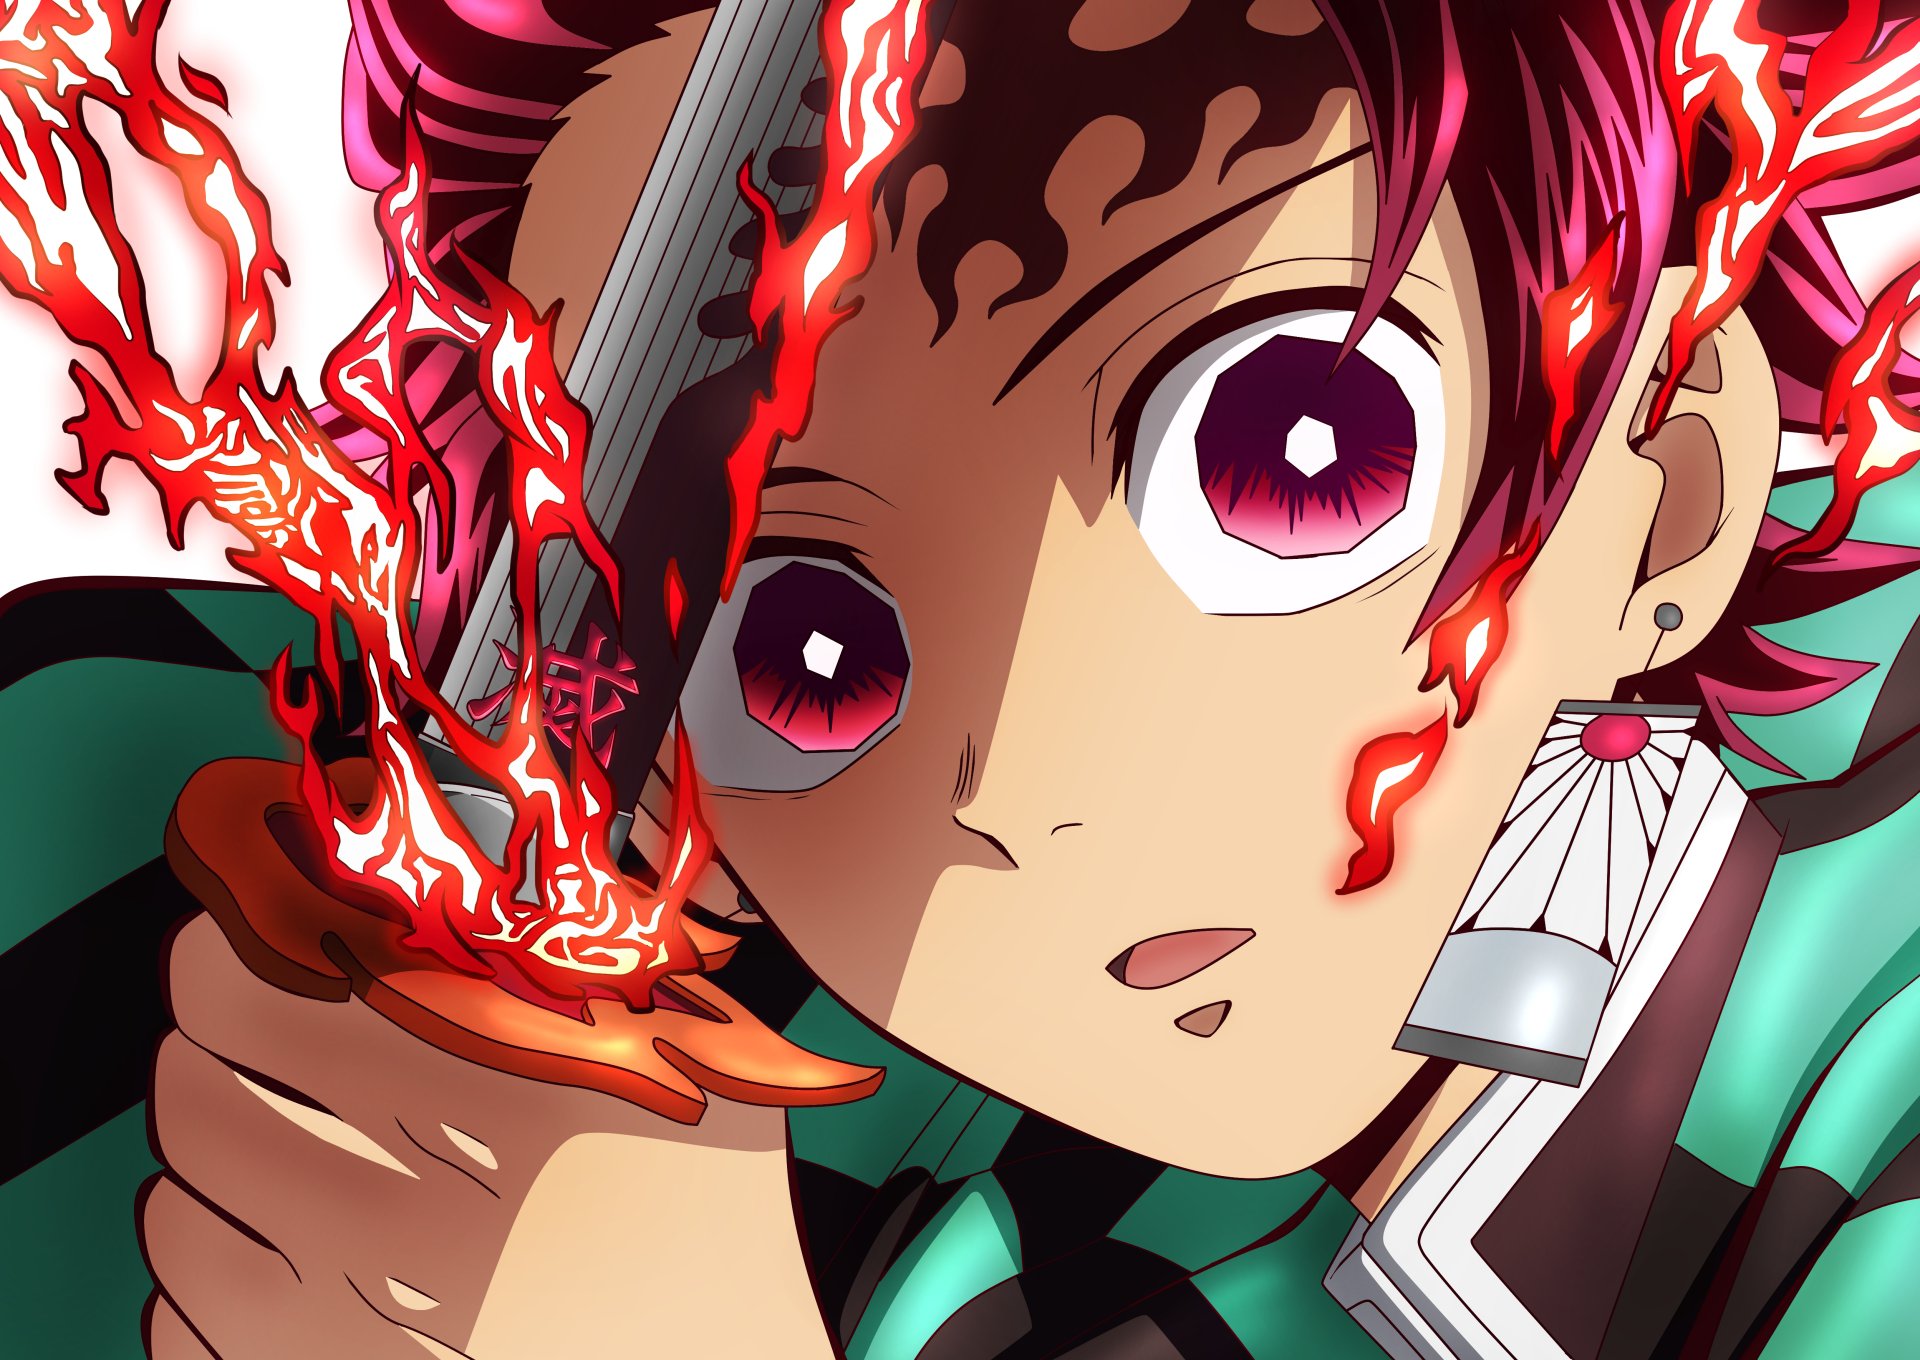 Anime Demon Slayer Kimetsu no Yaiba 4k Ultra HD Wallpaper by DT501061 余佳軒